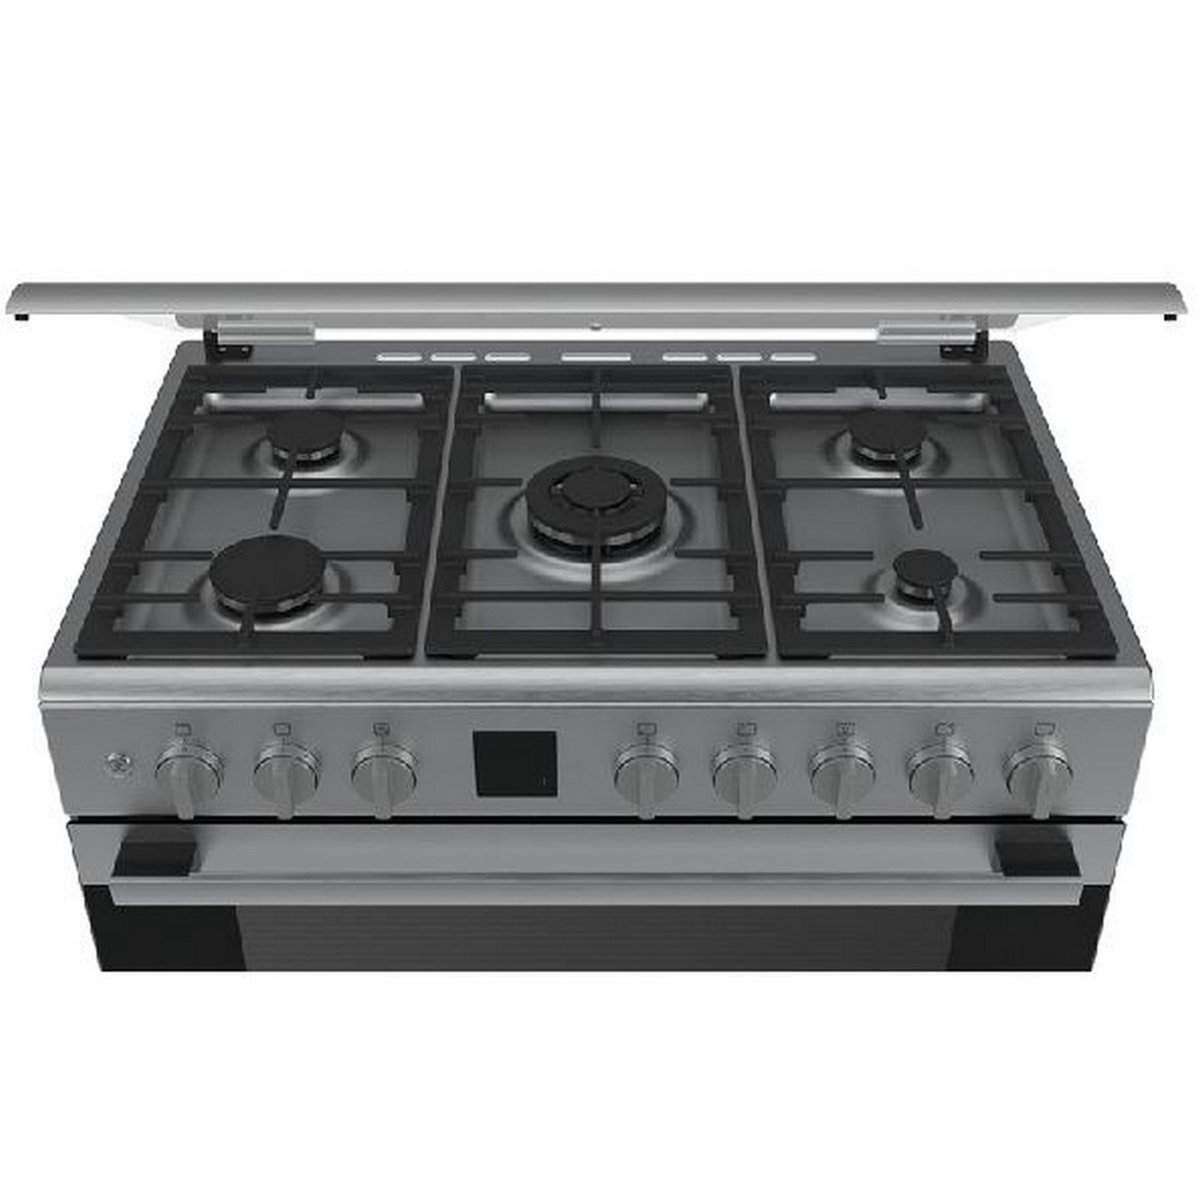 Bosch Cooking Range HGK90VQ50M 90x60 5Burner